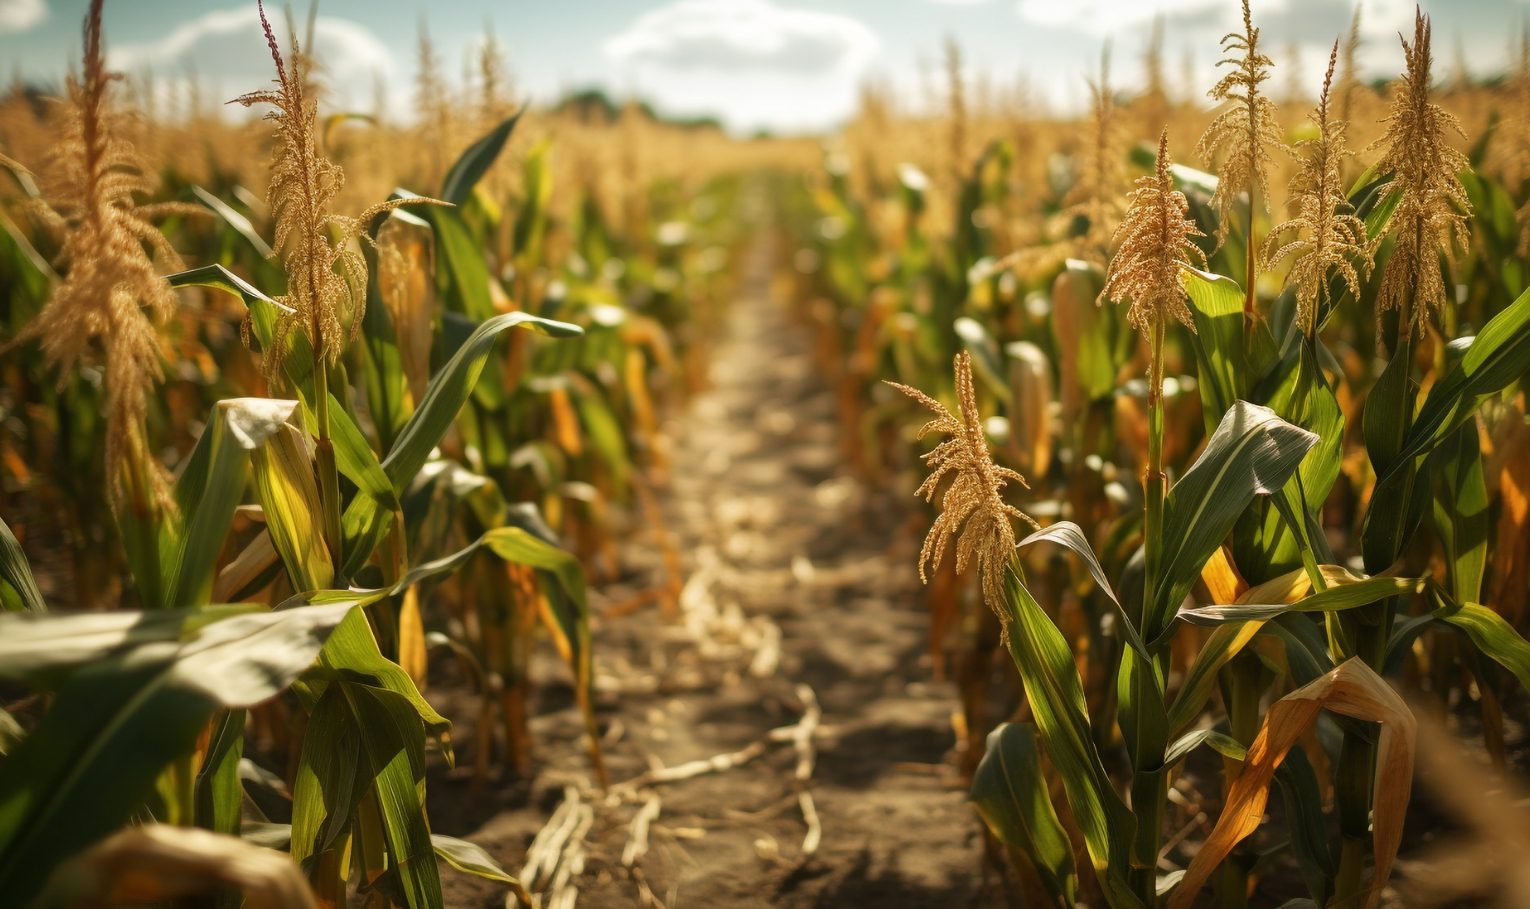 Waldo Realty Headline Image - A cornfield